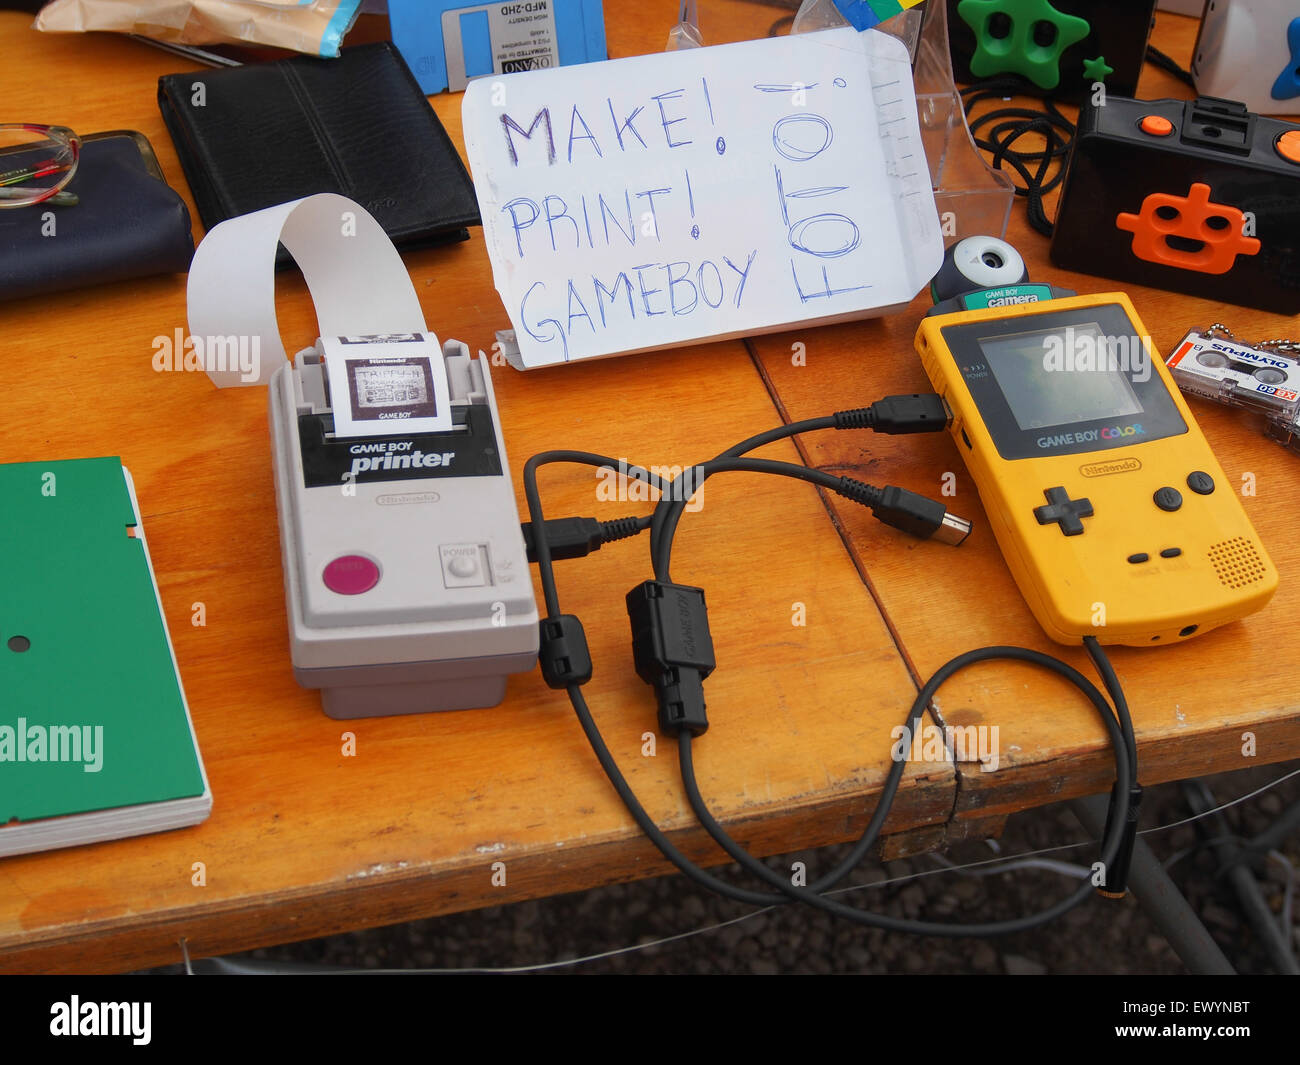 Game boy camera with printer printing Stock Photo - Alamy